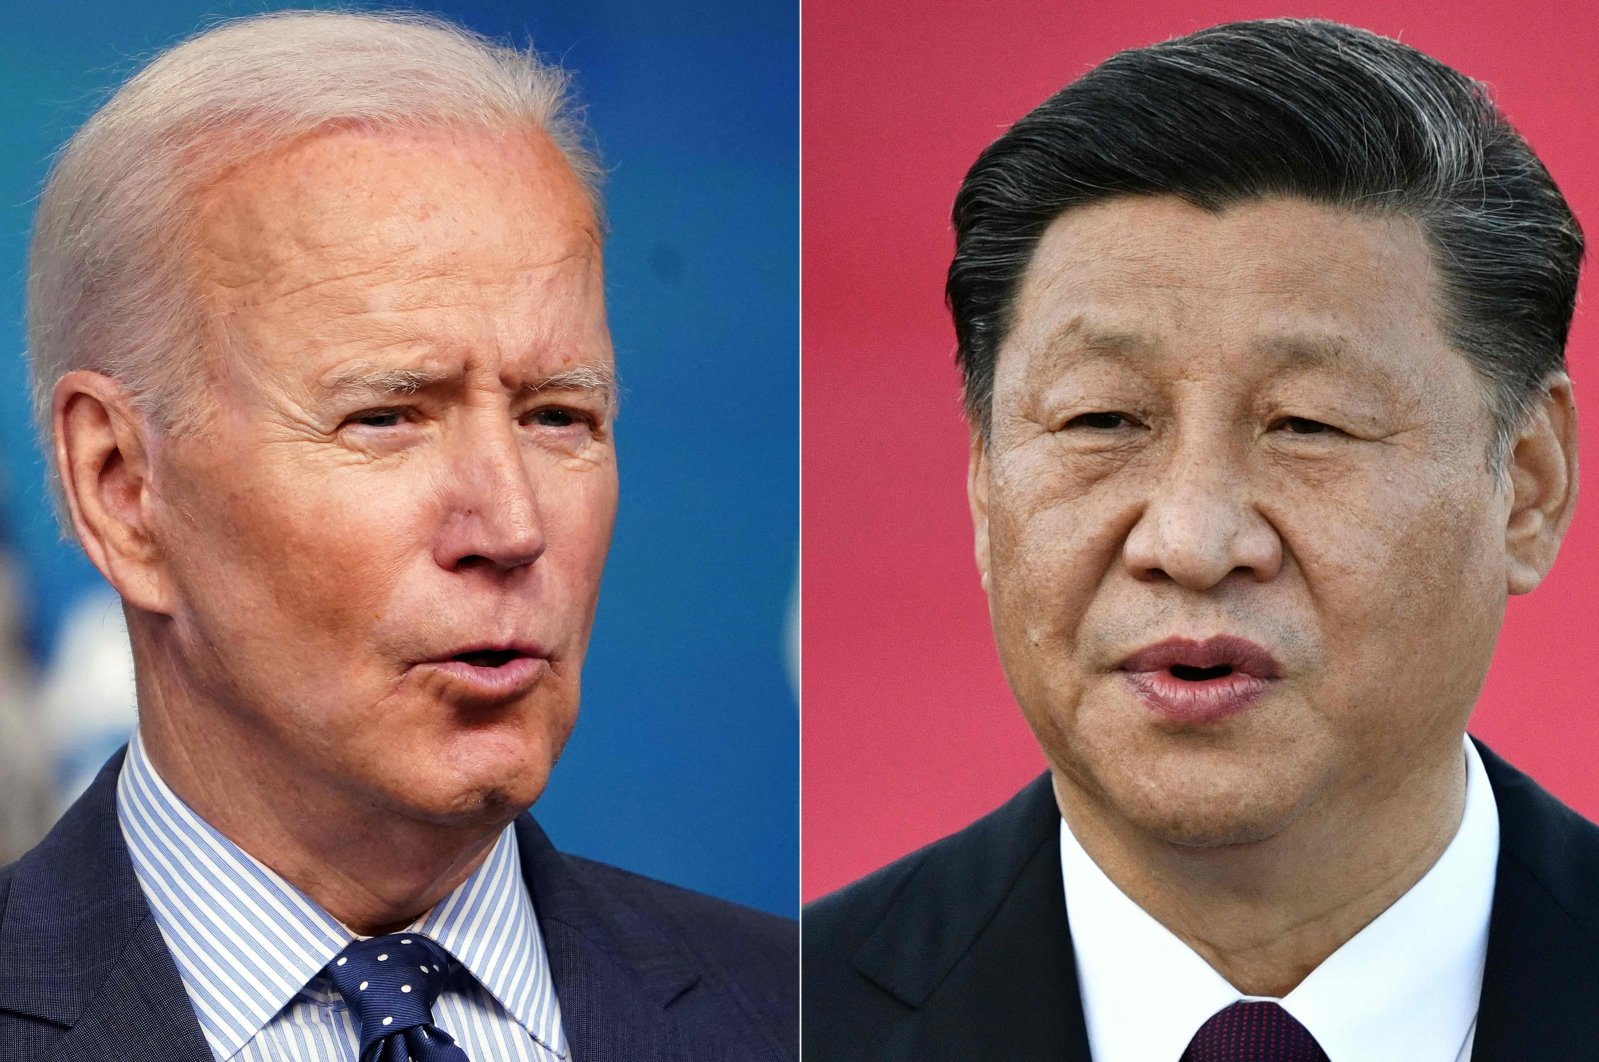 ‘Mereka yang bermain api akan binasa karenanya,’ Xi memperingatkan Biden tentang Taiwan